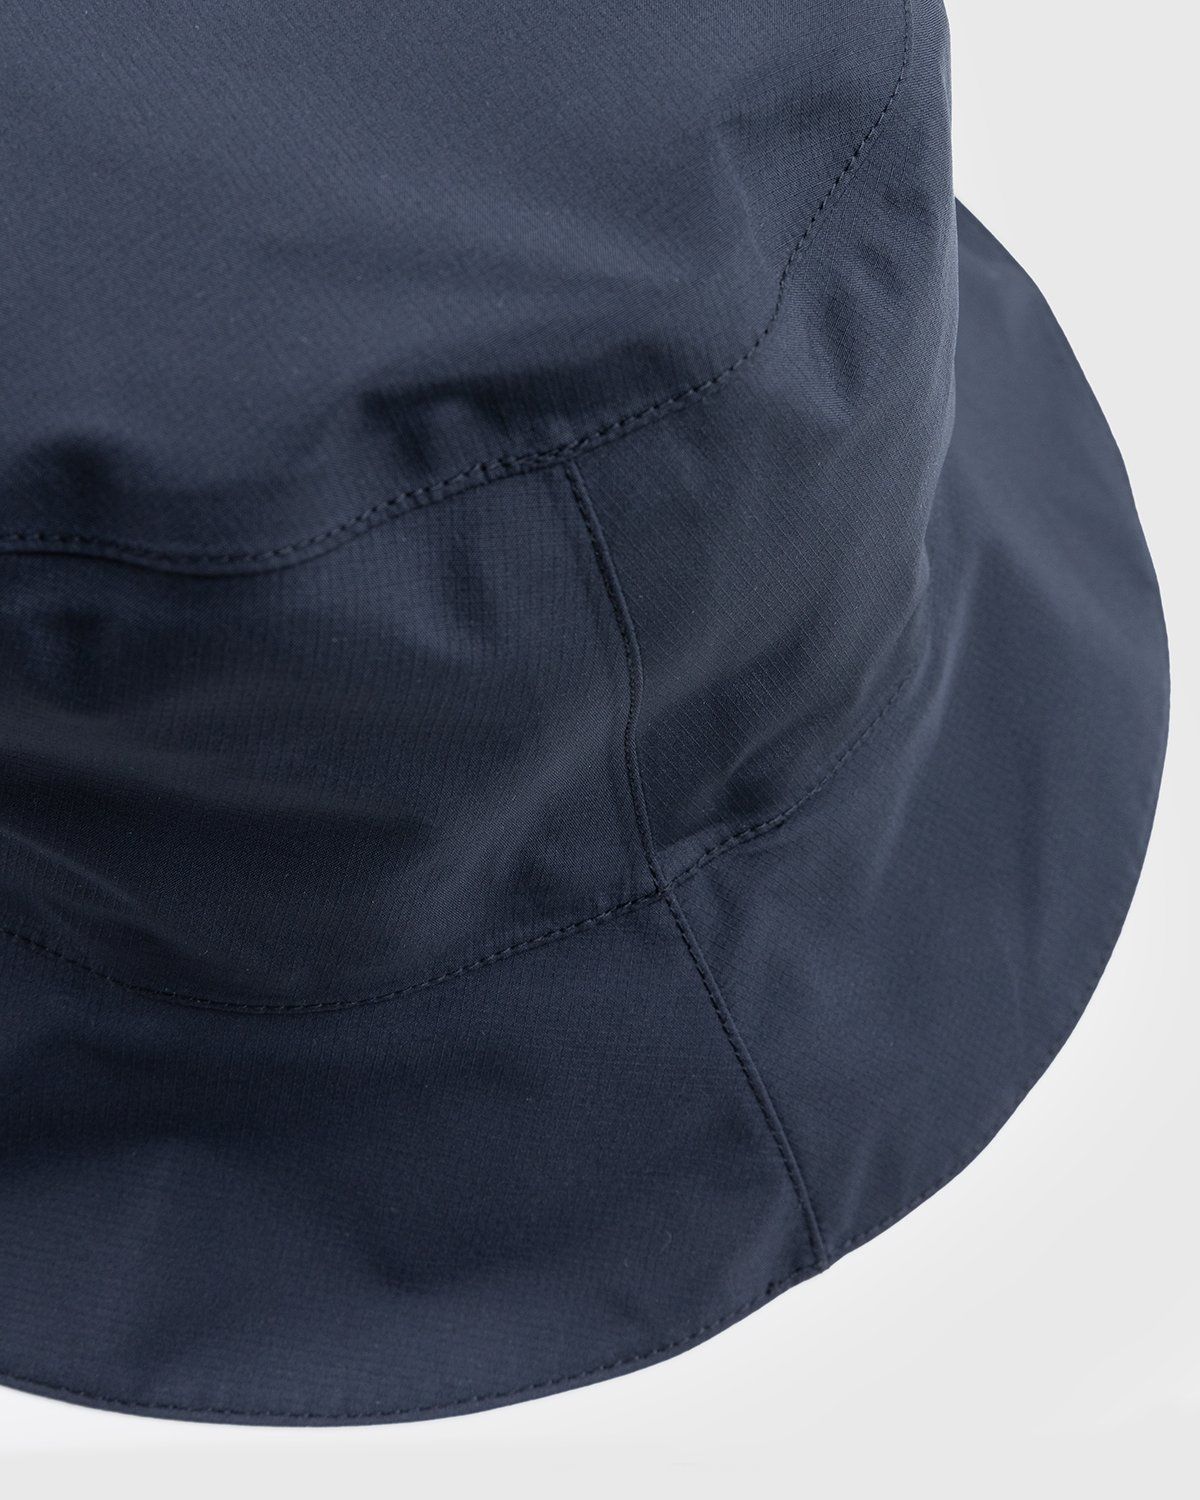 ACRONYM – J96-GT Jacket Black - Outerwear - Black - Image 10